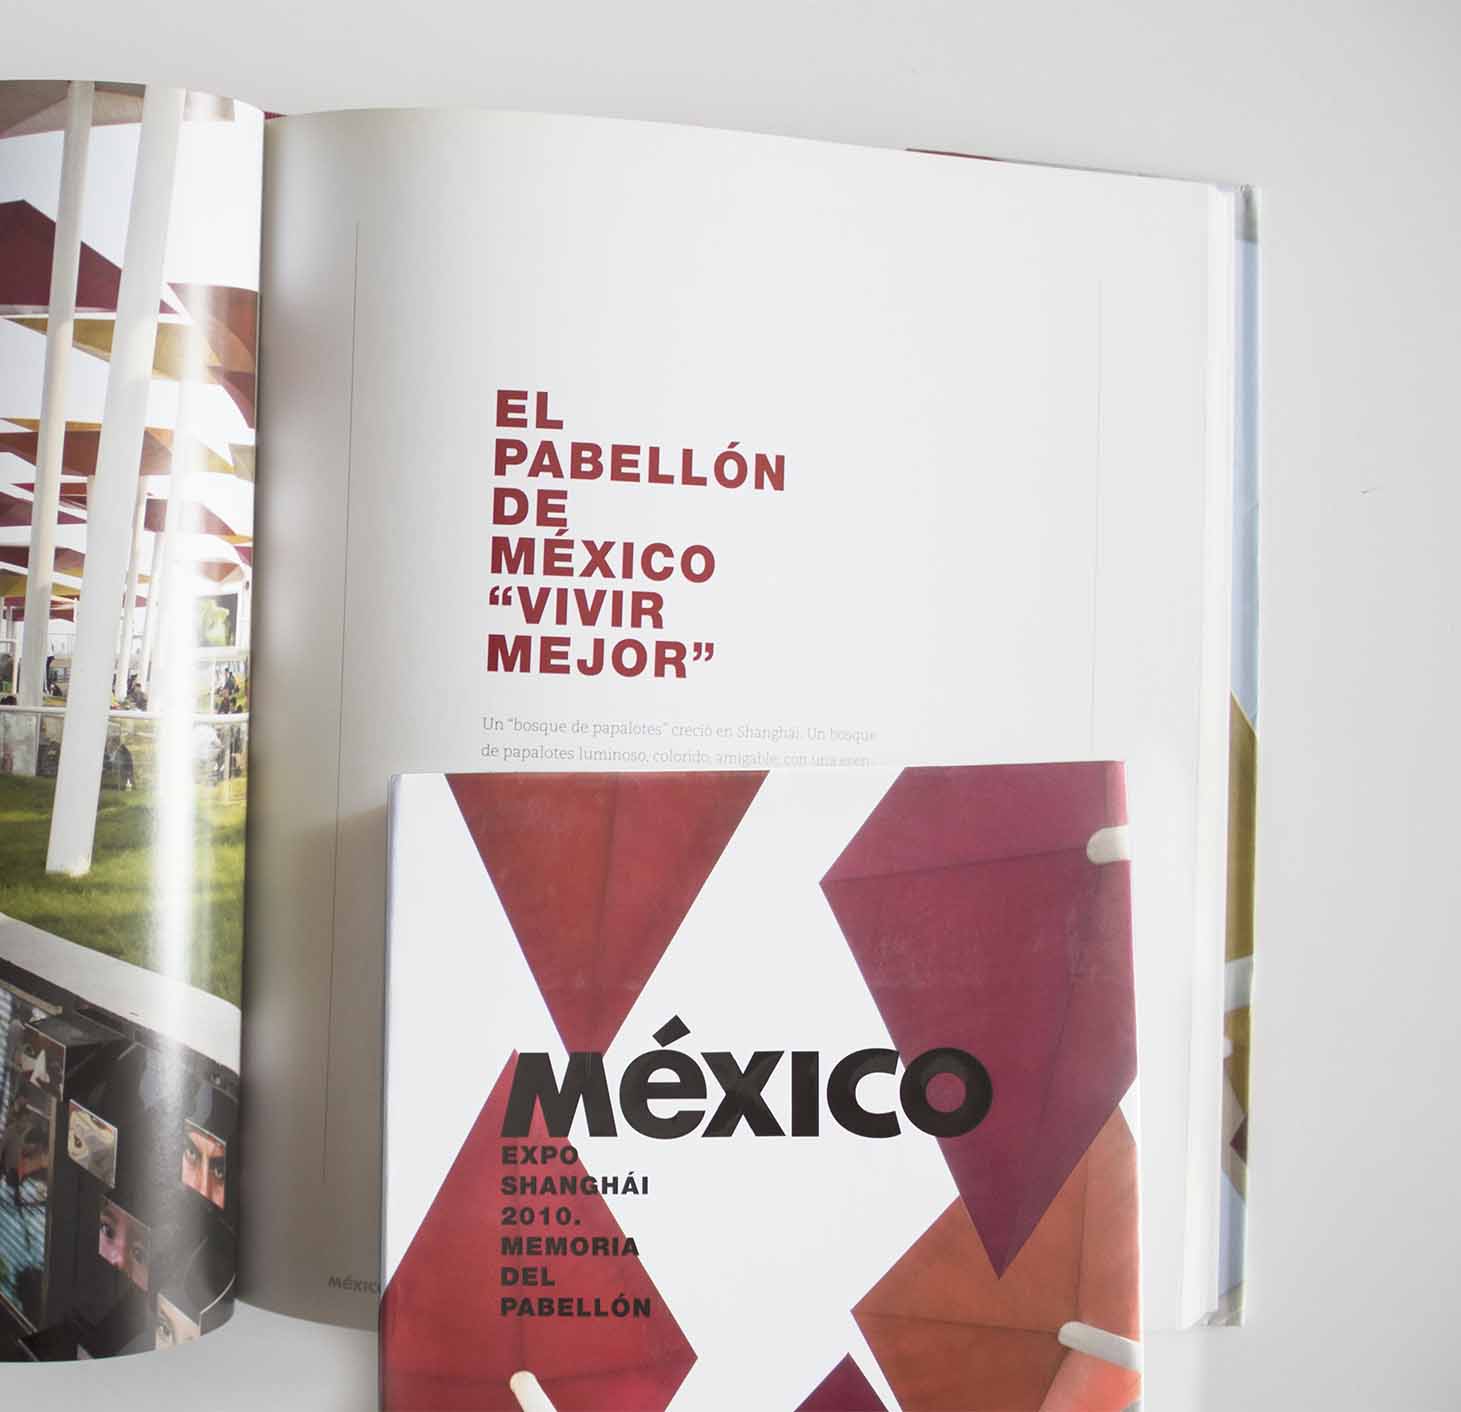 PROMÉXICO PUBLISHED THE MEMORIES OF THE MEXICAN PAVILION : SLOT